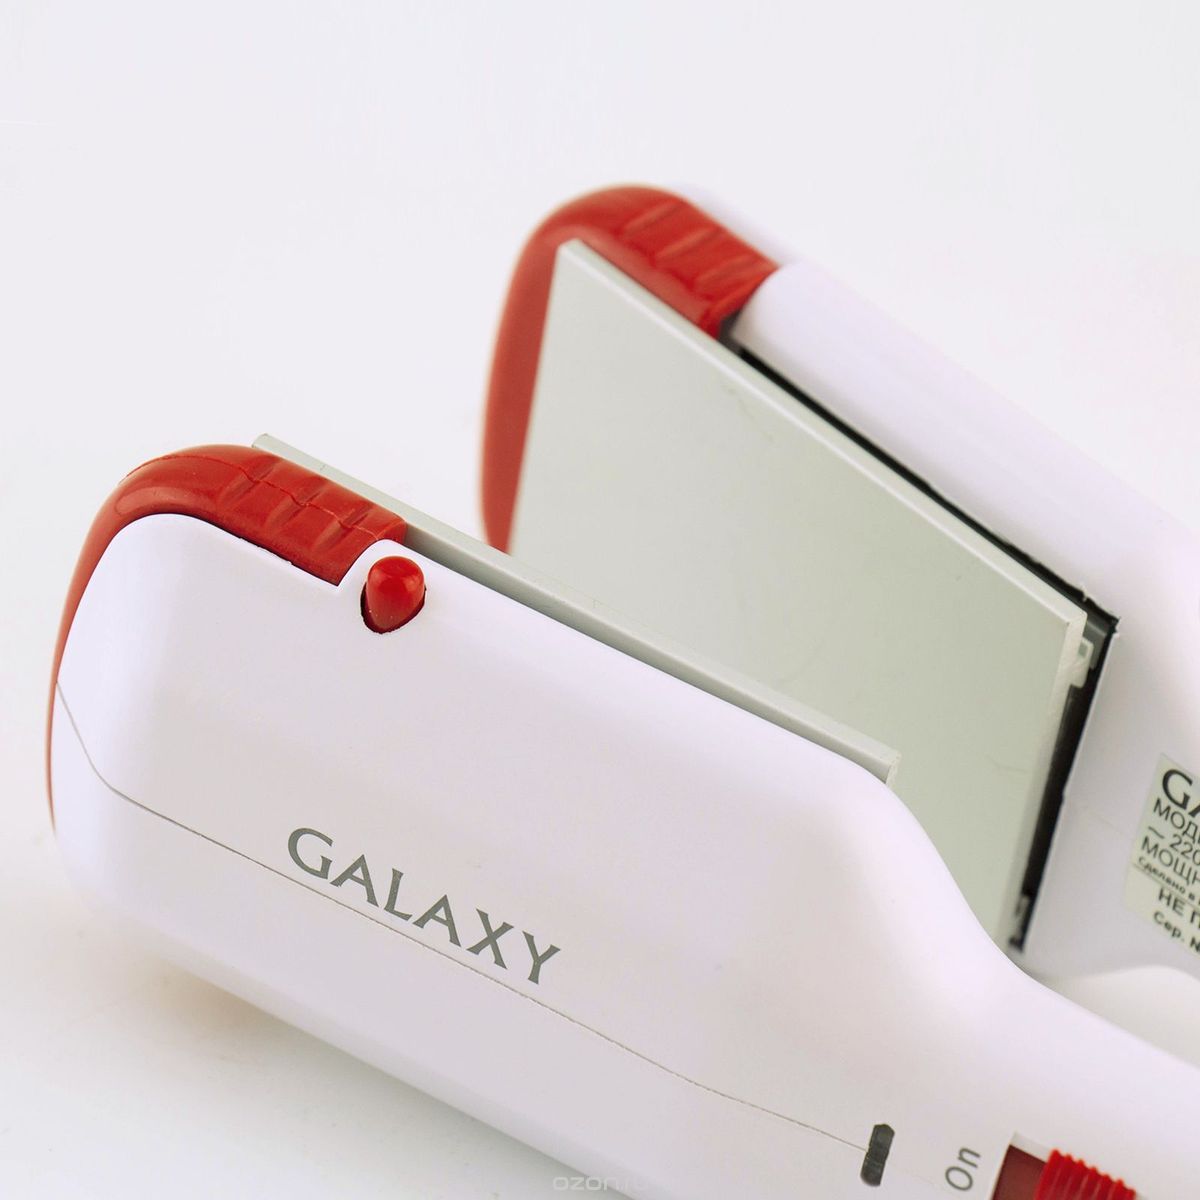    Galaxy GL 4515, White Red